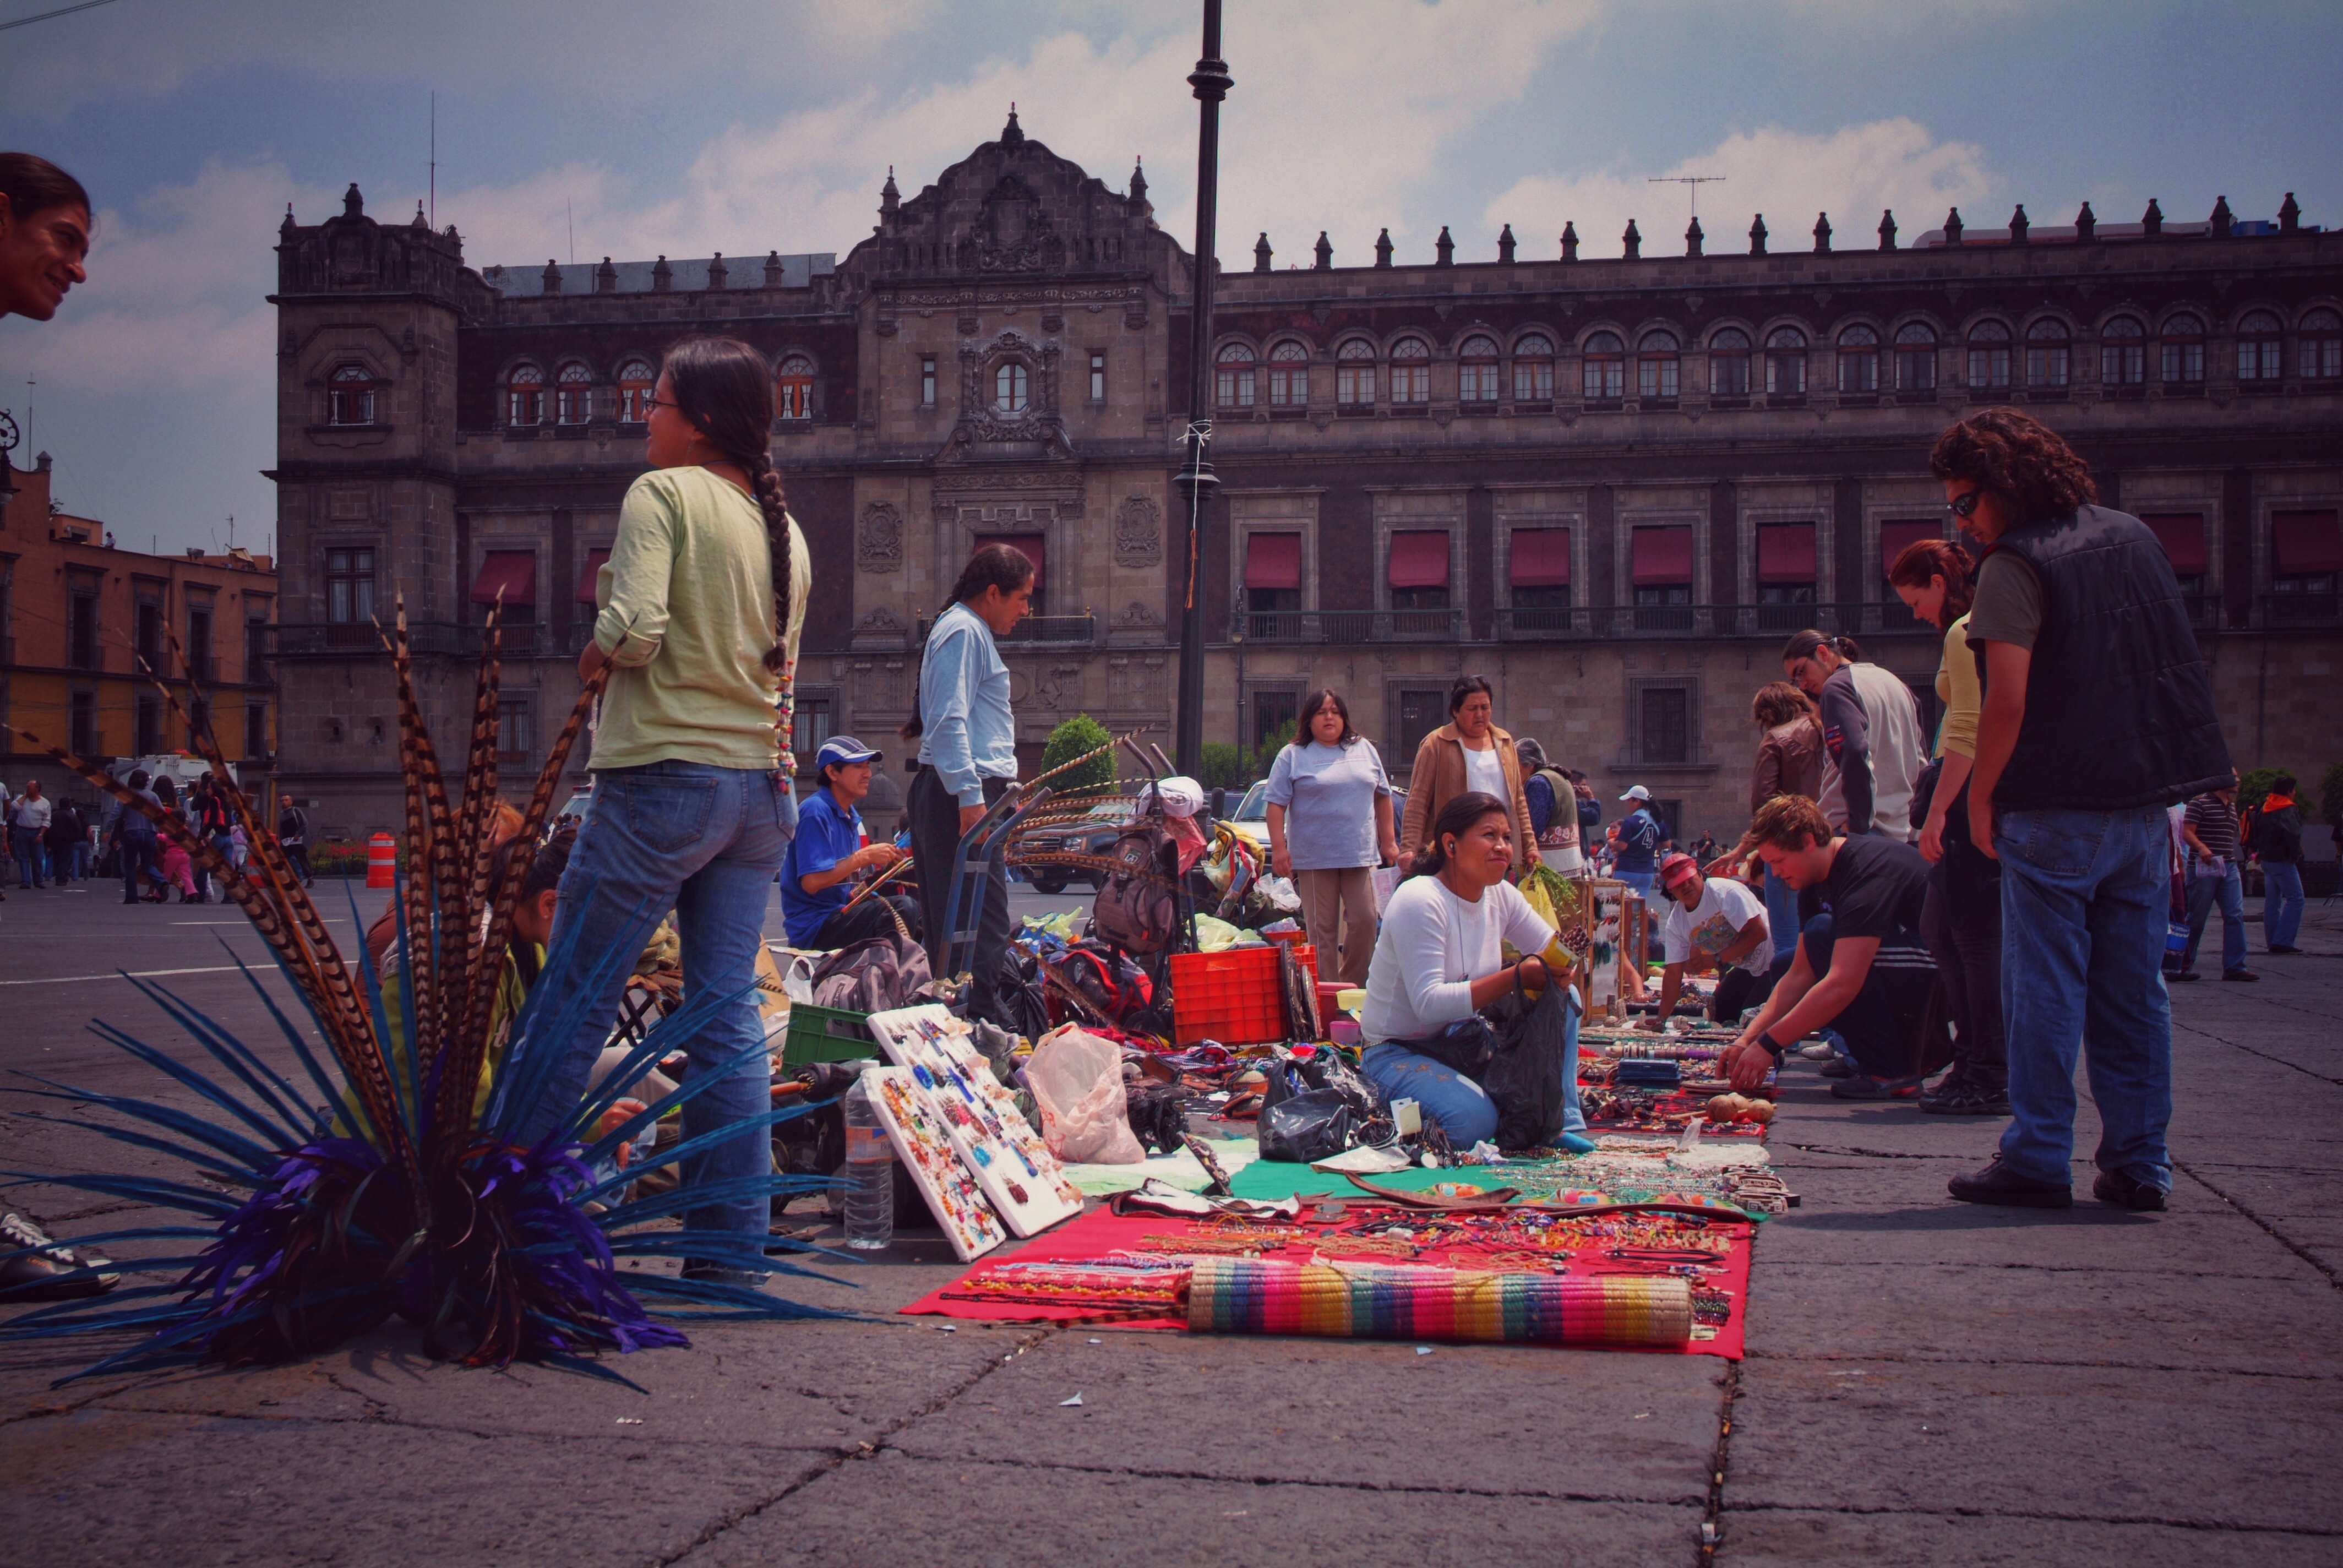 Traders in Mexico City's main square. Zocalo